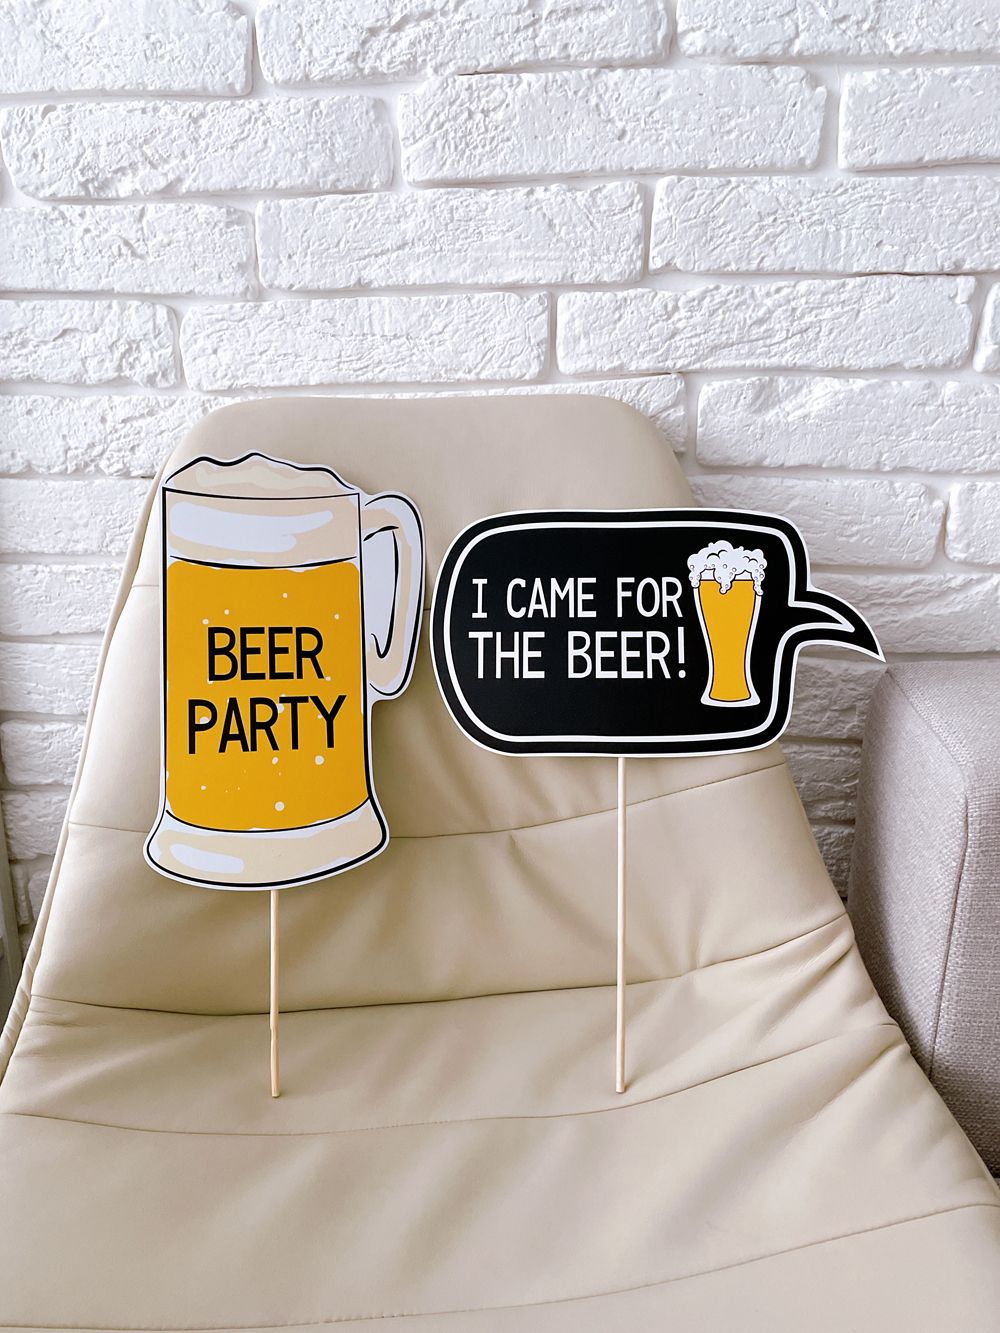 Табличка для фотосесії "I came for Beer"